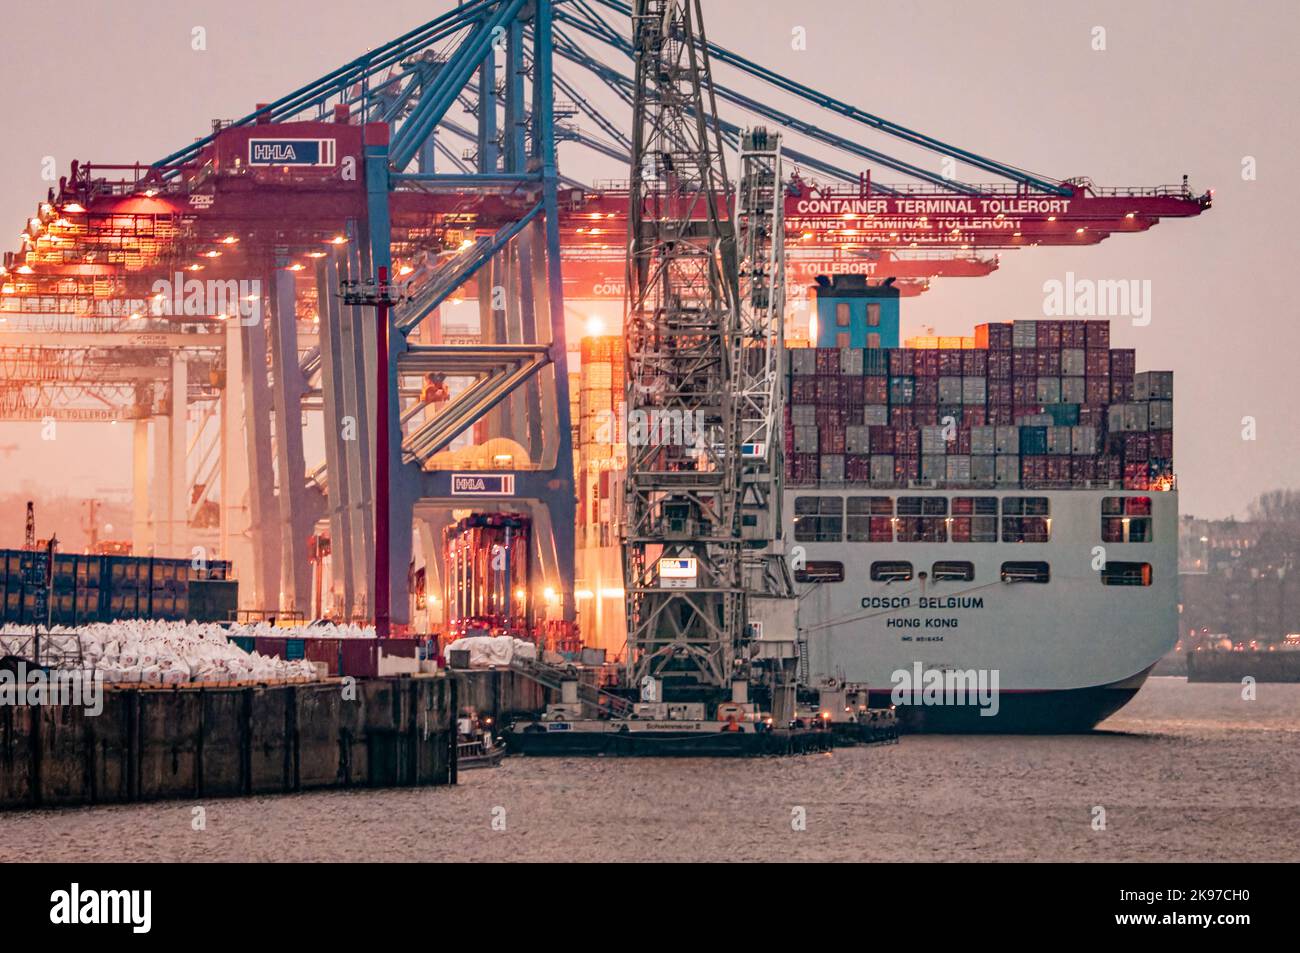 Hamburg, 23. Februar 2014: COSCO Container Schiff im Hamburger Hafen am Container Terminal Tollerort. Stockfoto